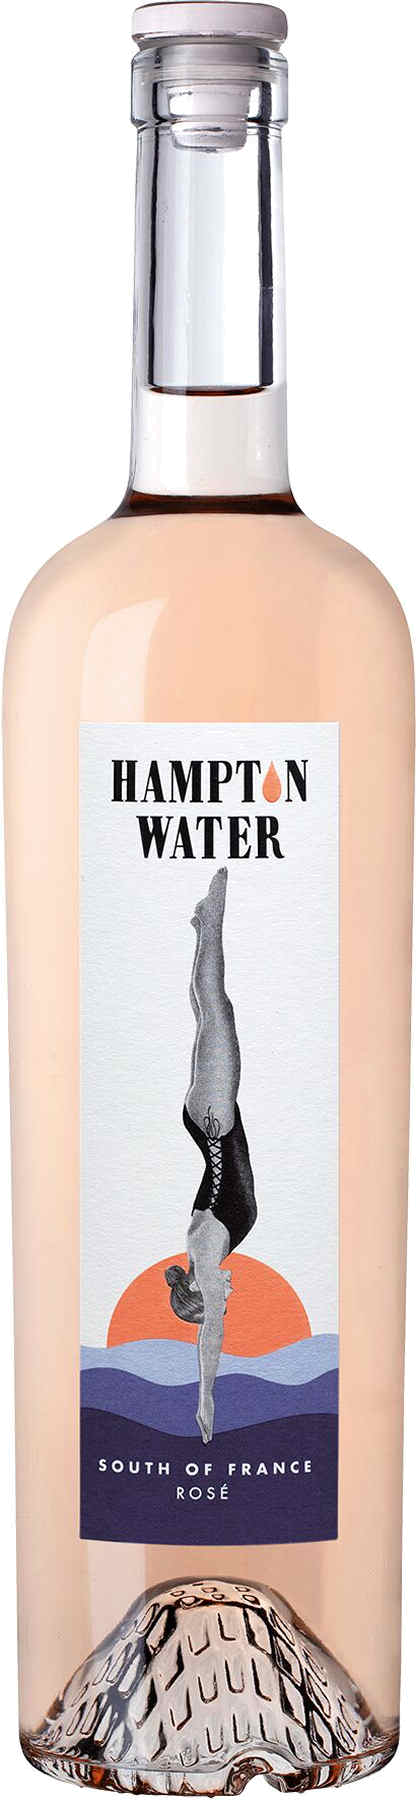 Gérard Bertrand Hampton Water Rosé